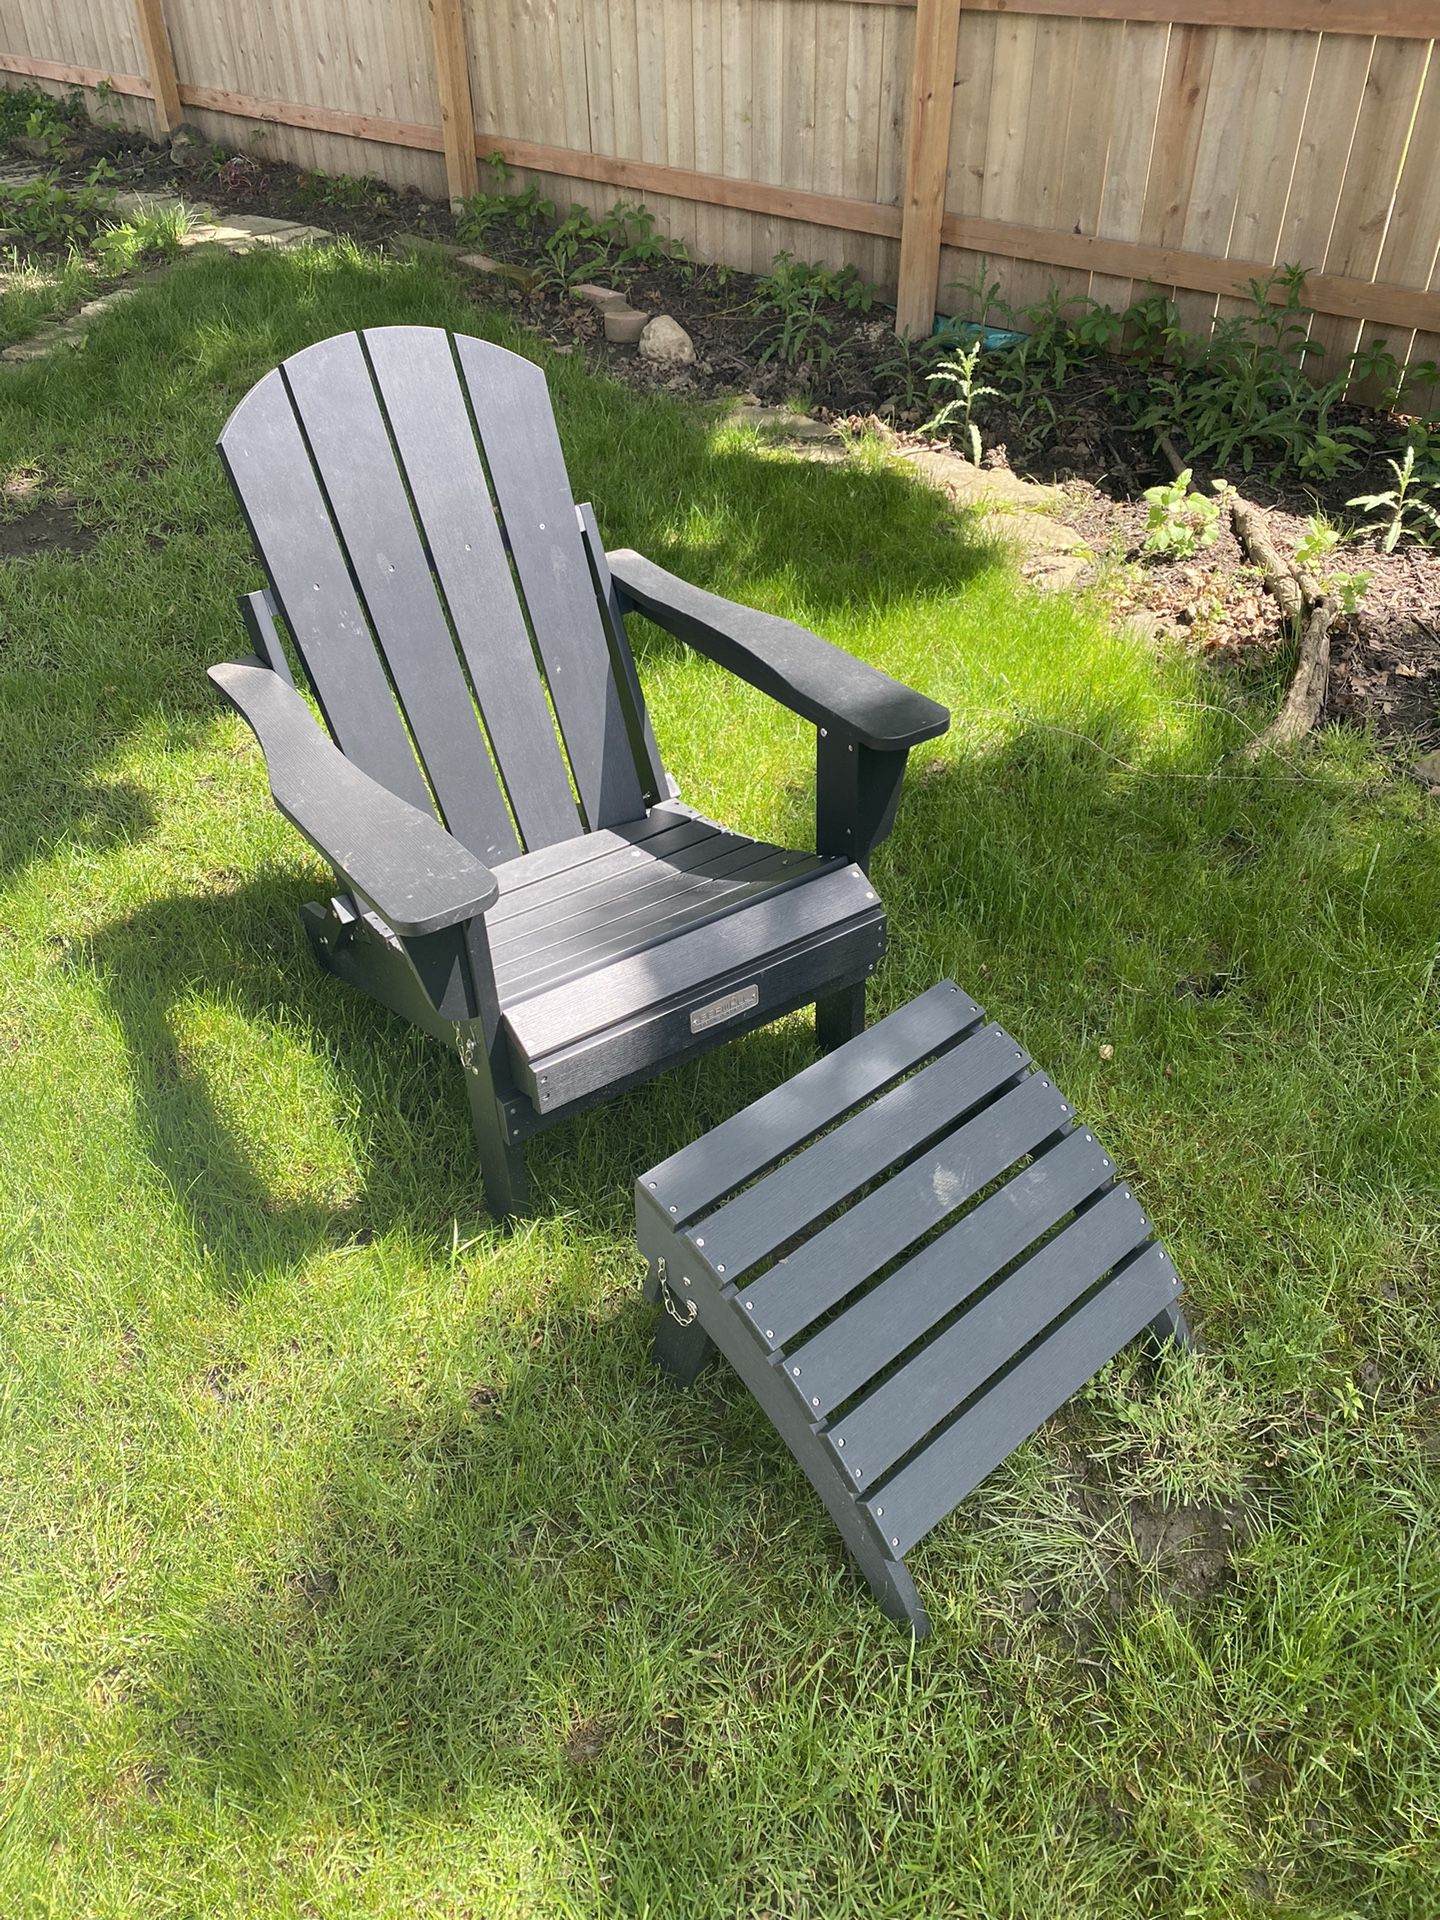 Serwall Adirondack Chair + Foot Stool